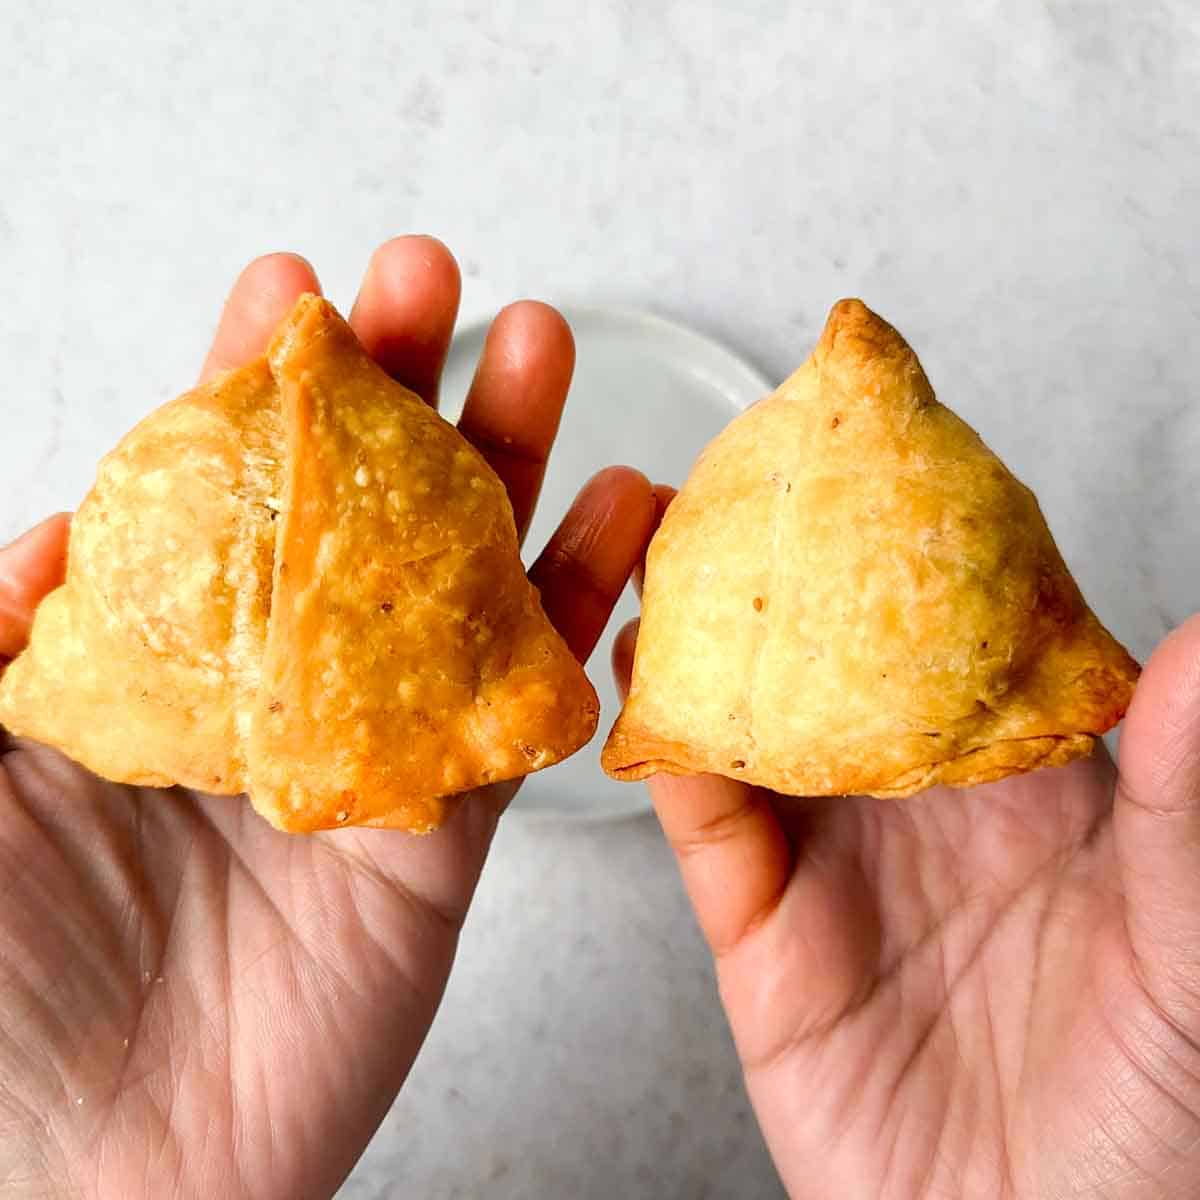 Fried samosa on the left vs. baked samosa on the right